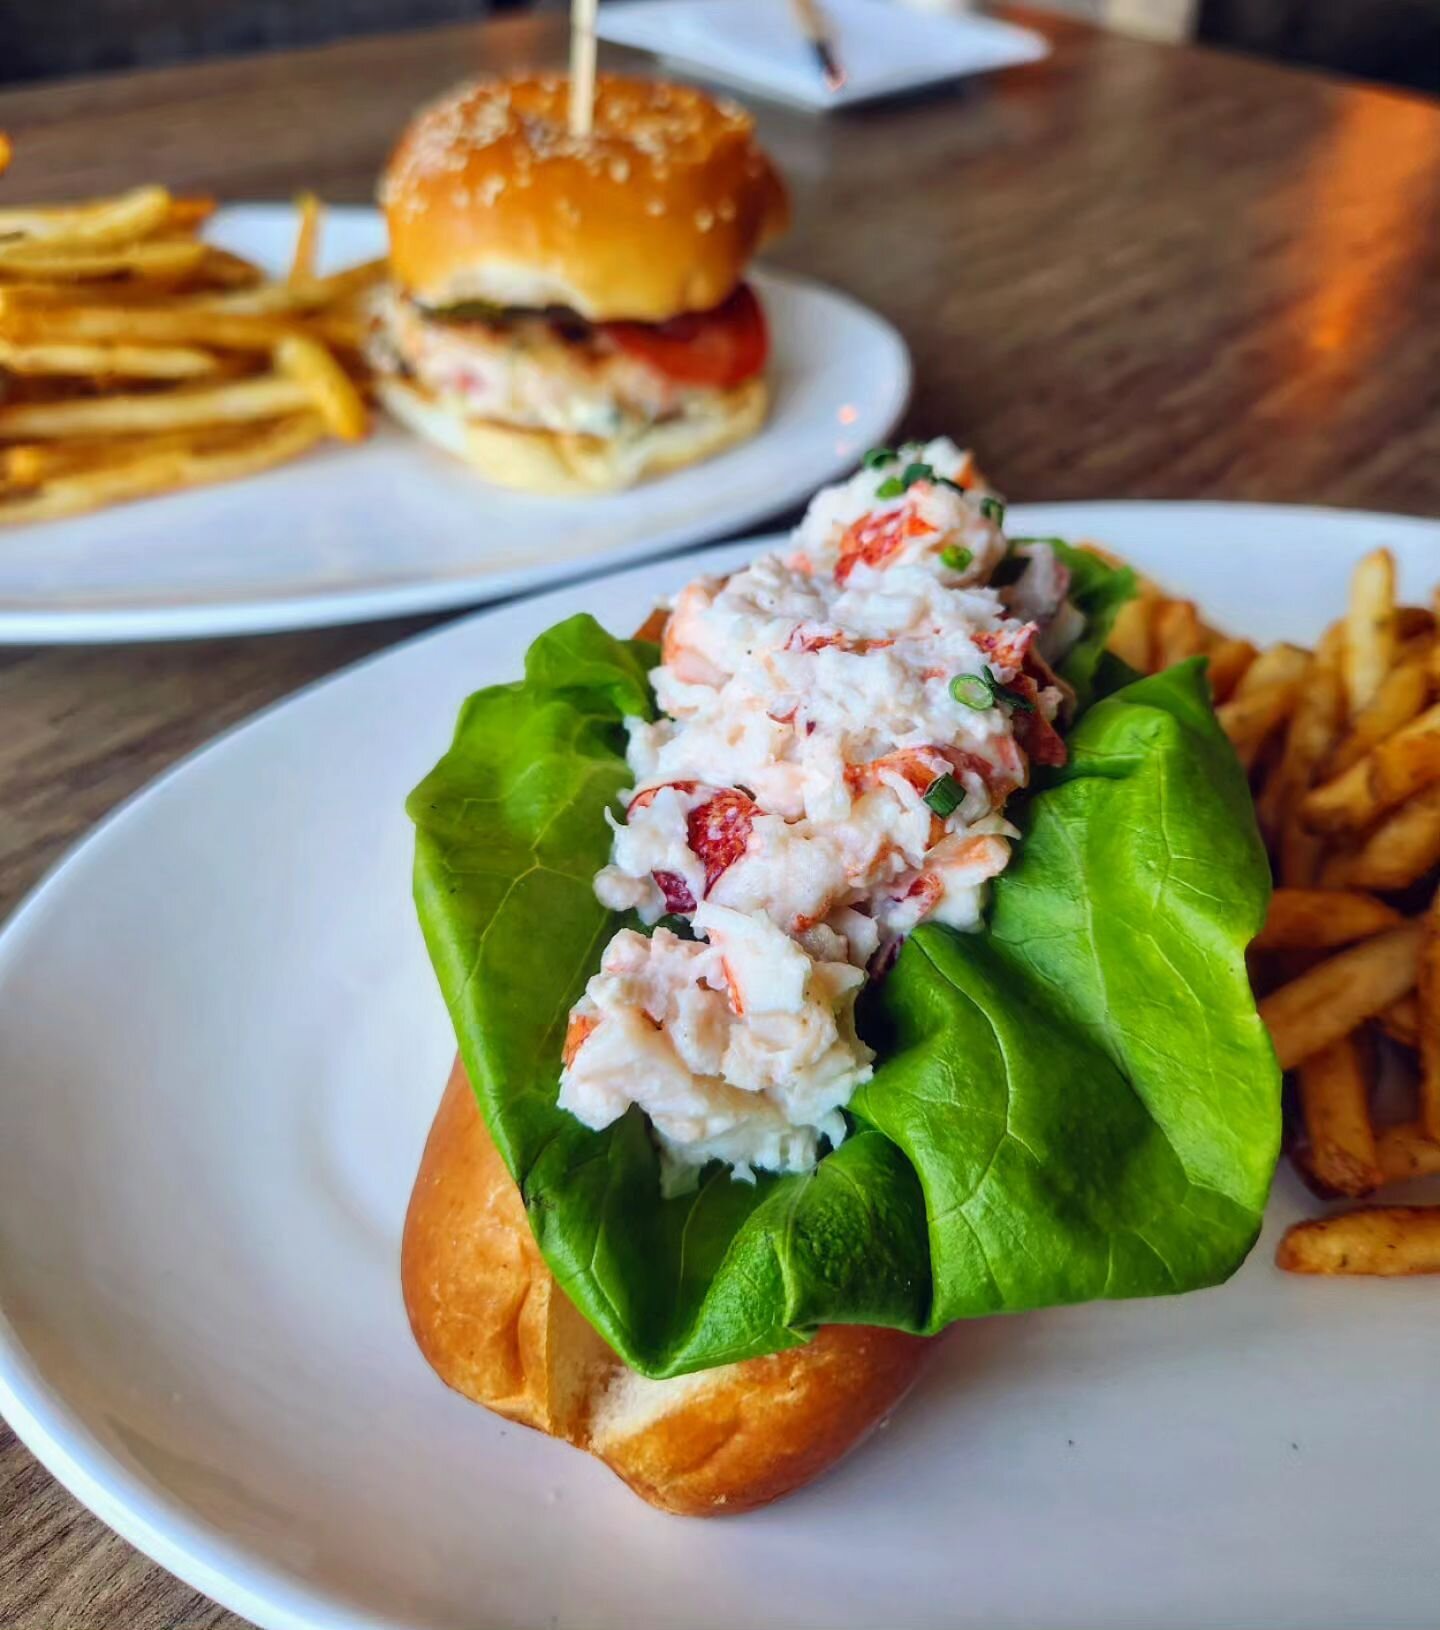 Classic Lobster roll and Lobster burger from @lobsterburgerbar 🦞🍔
.
.
.
.
.
#food #foodie #foodpics #lobster #torontorestaurants #burger #seafood #yelpelite #yelp #brampton #mississauga #toronto #torontofood #lifestyle